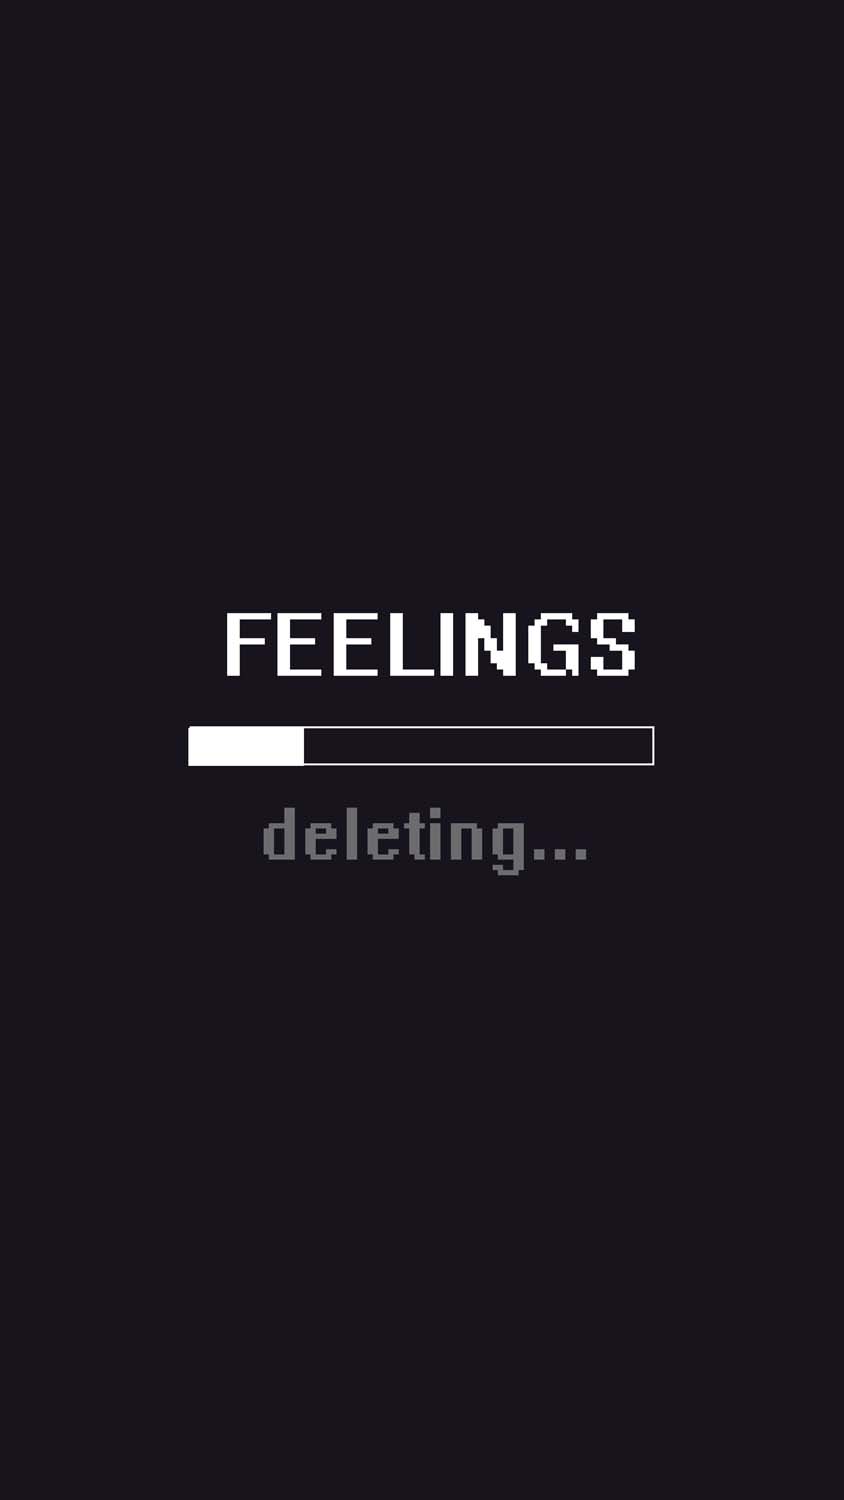 Feelings Deleting iPhone Wallpaper HD